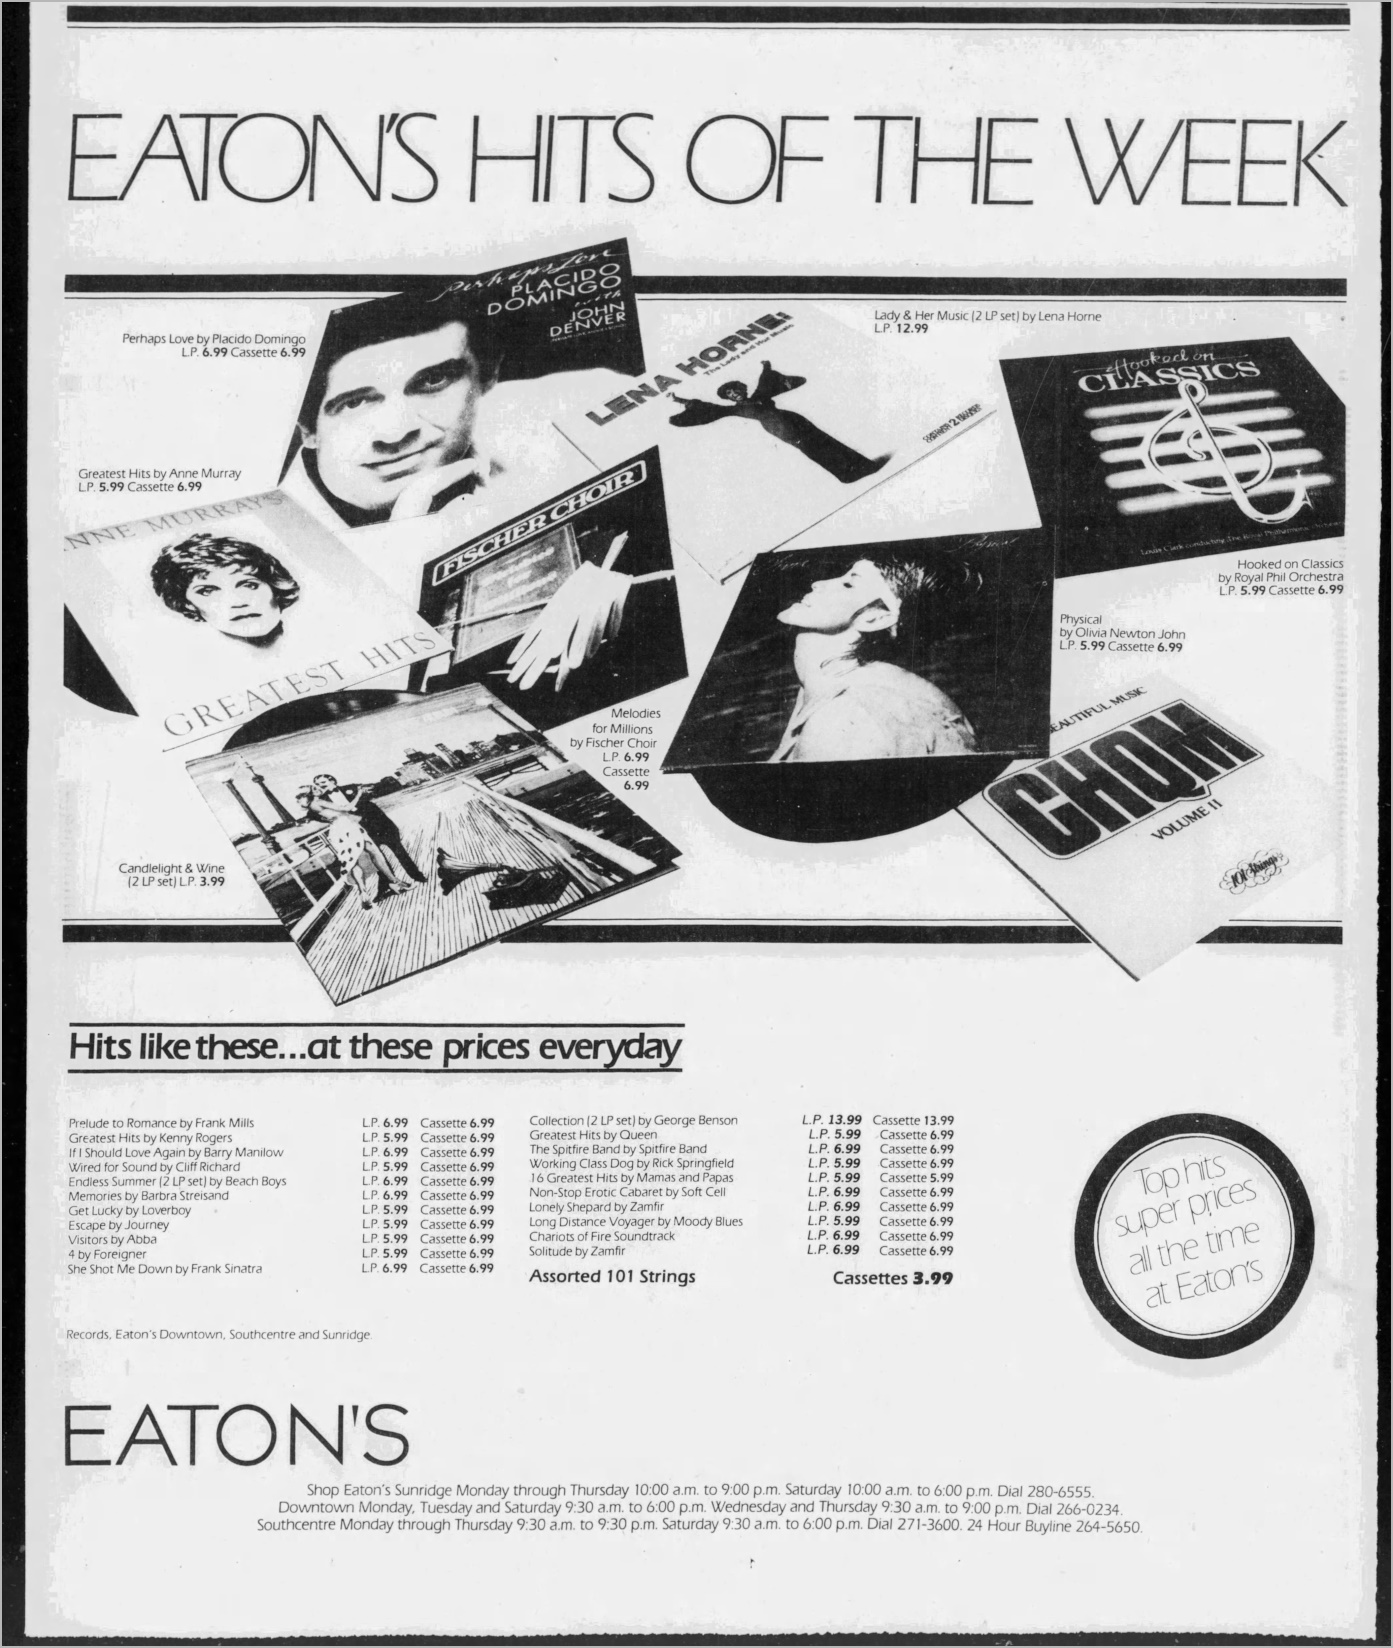 Physical album advert for Eaton's - Calgary Herald